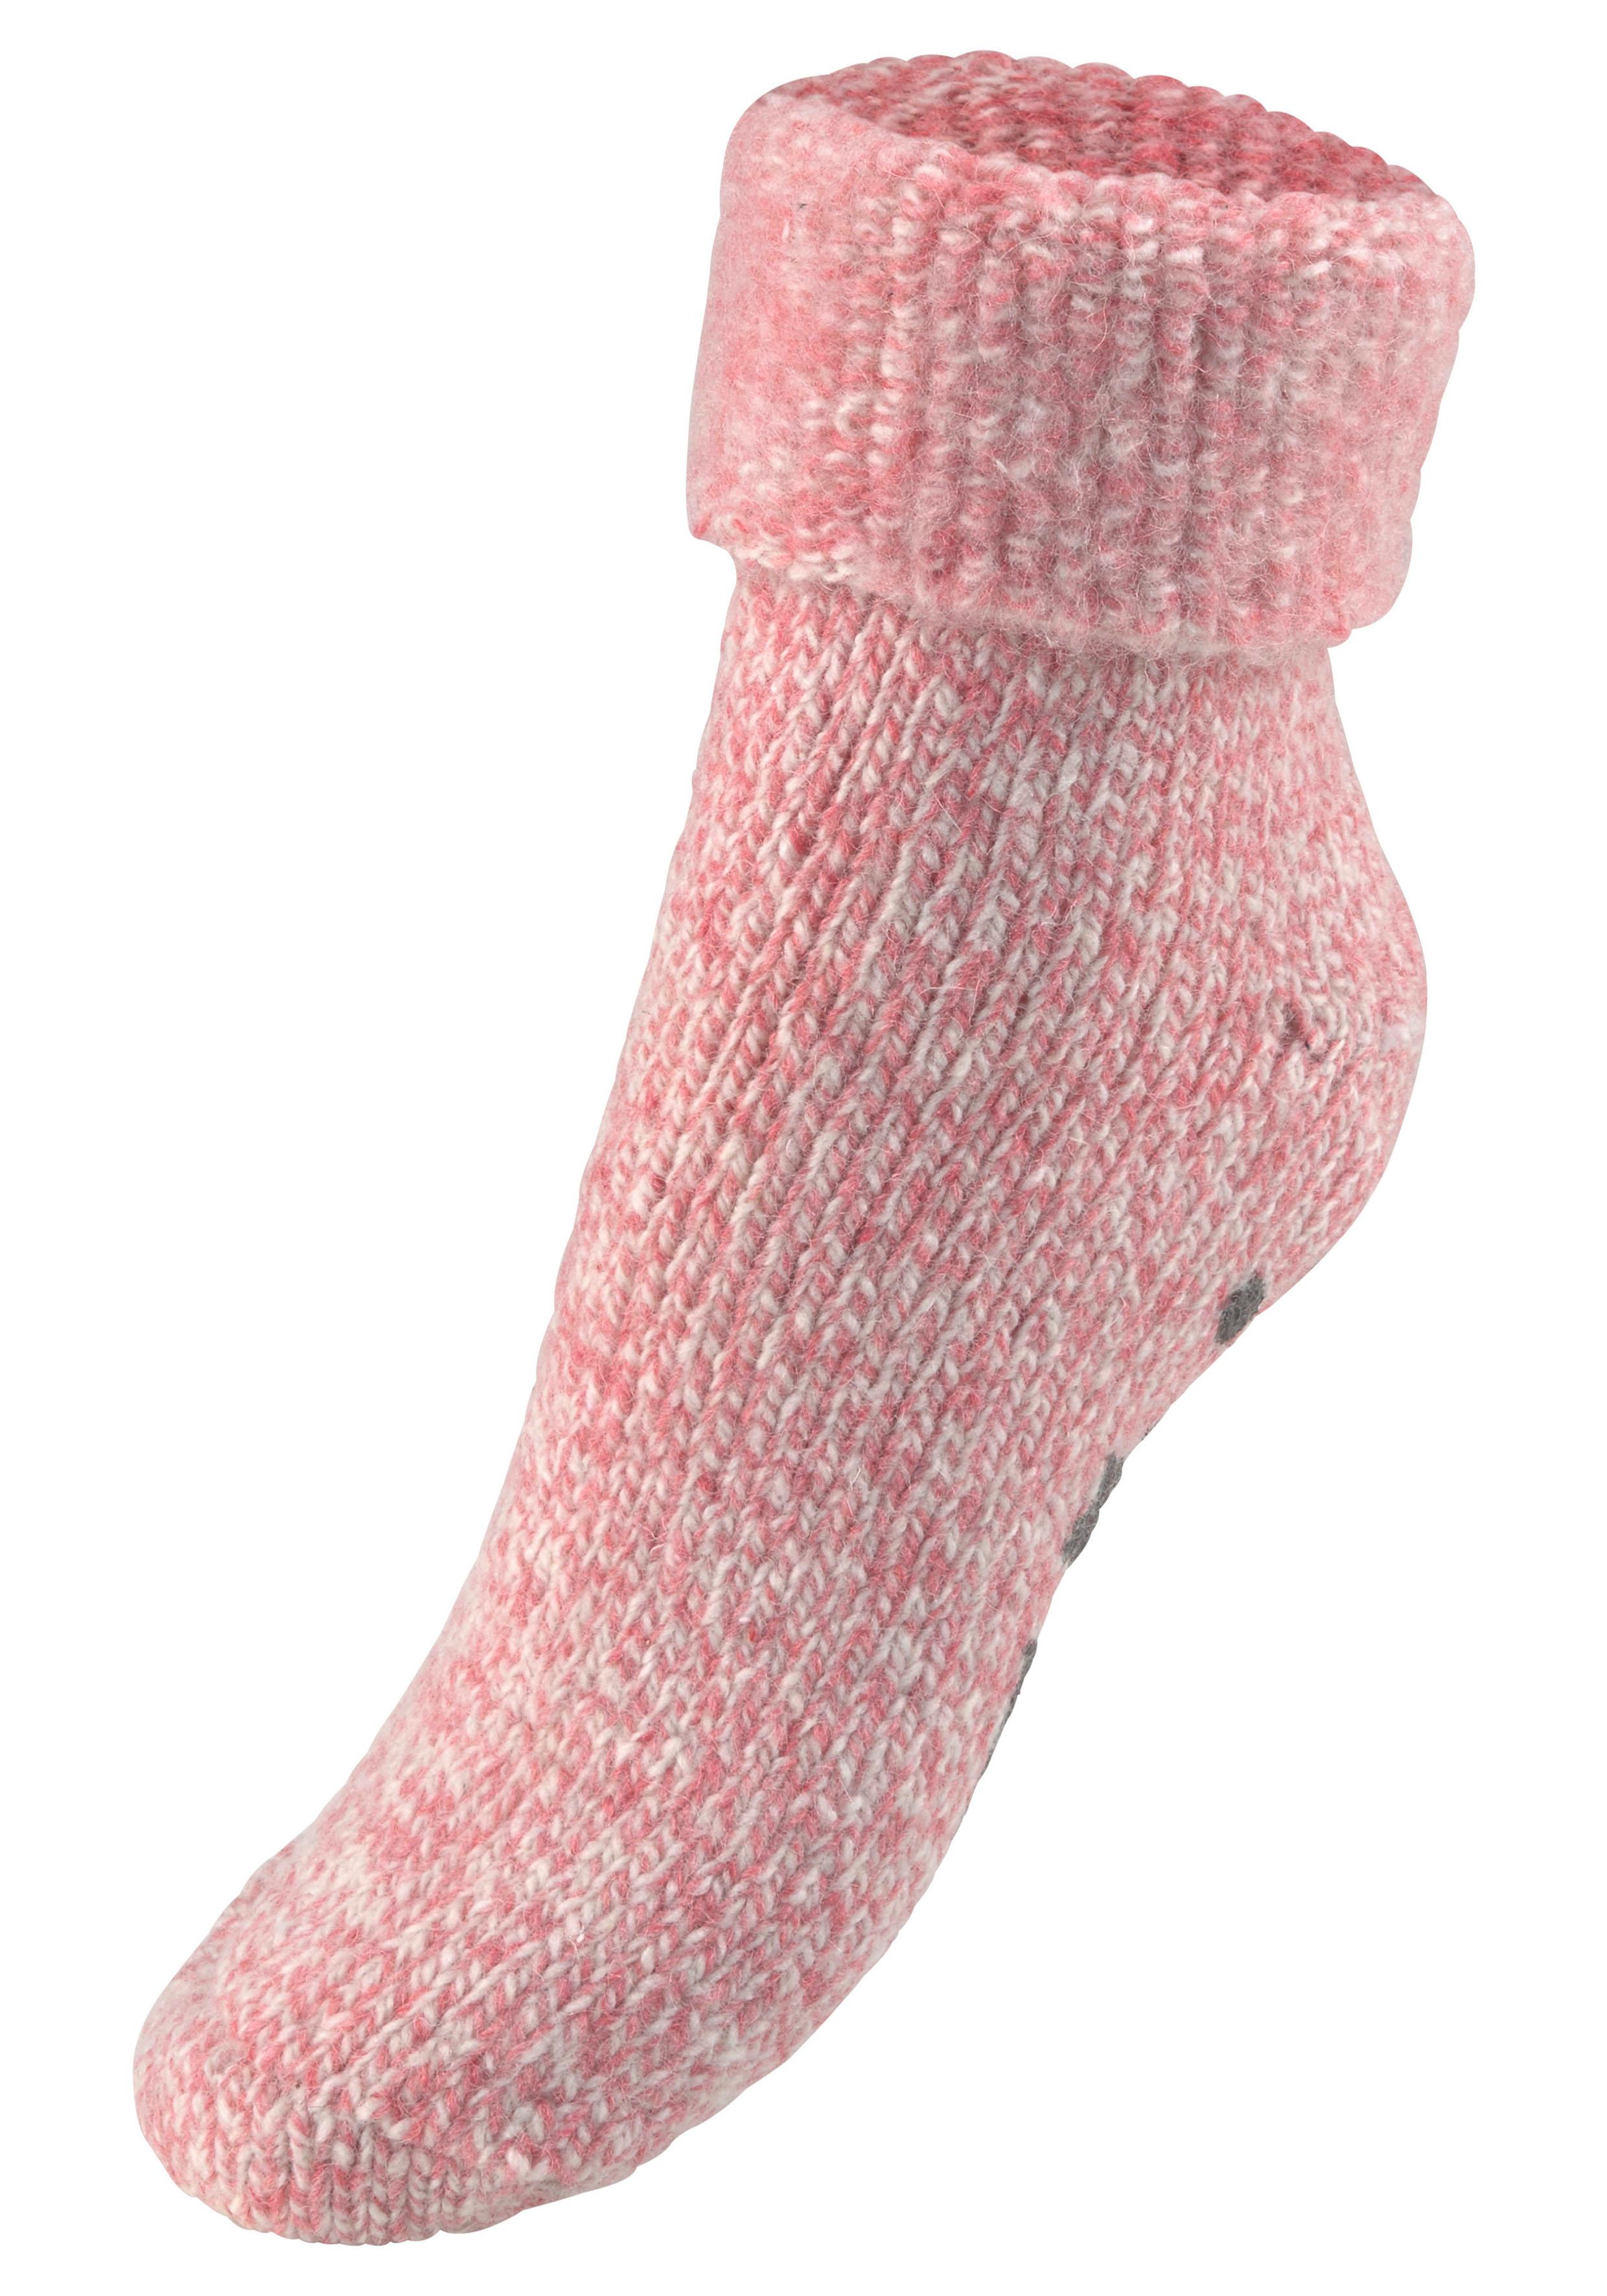 Lavana ABS-Socken, (1 Paar) günstig online kaufen